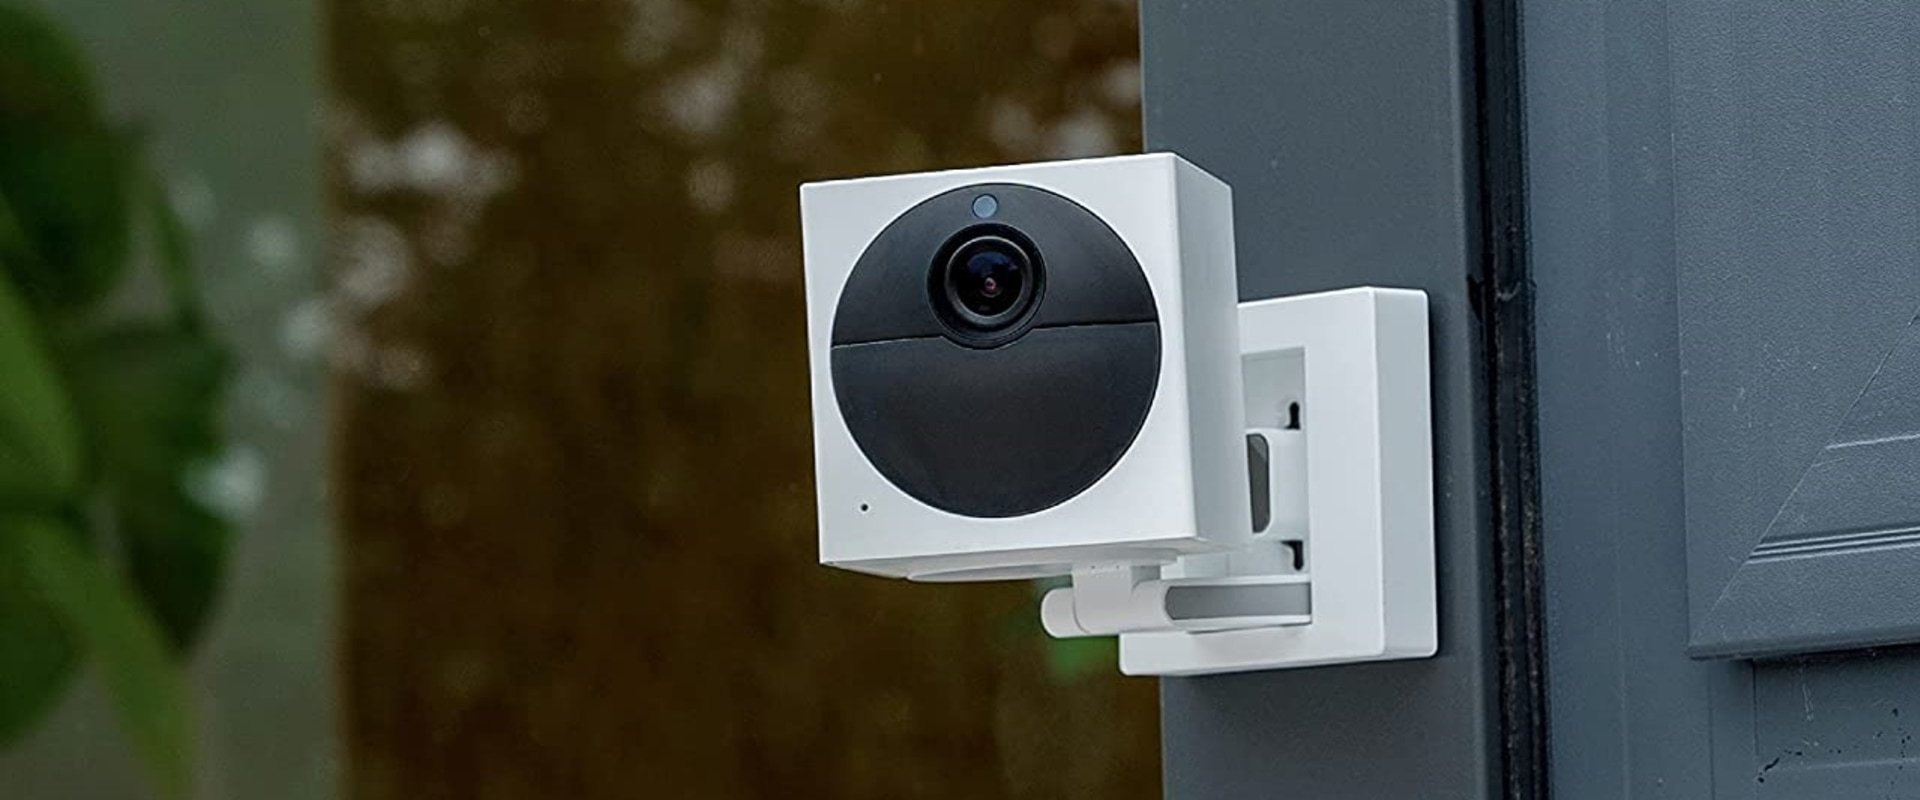 Reviews of Outdoor Webcams